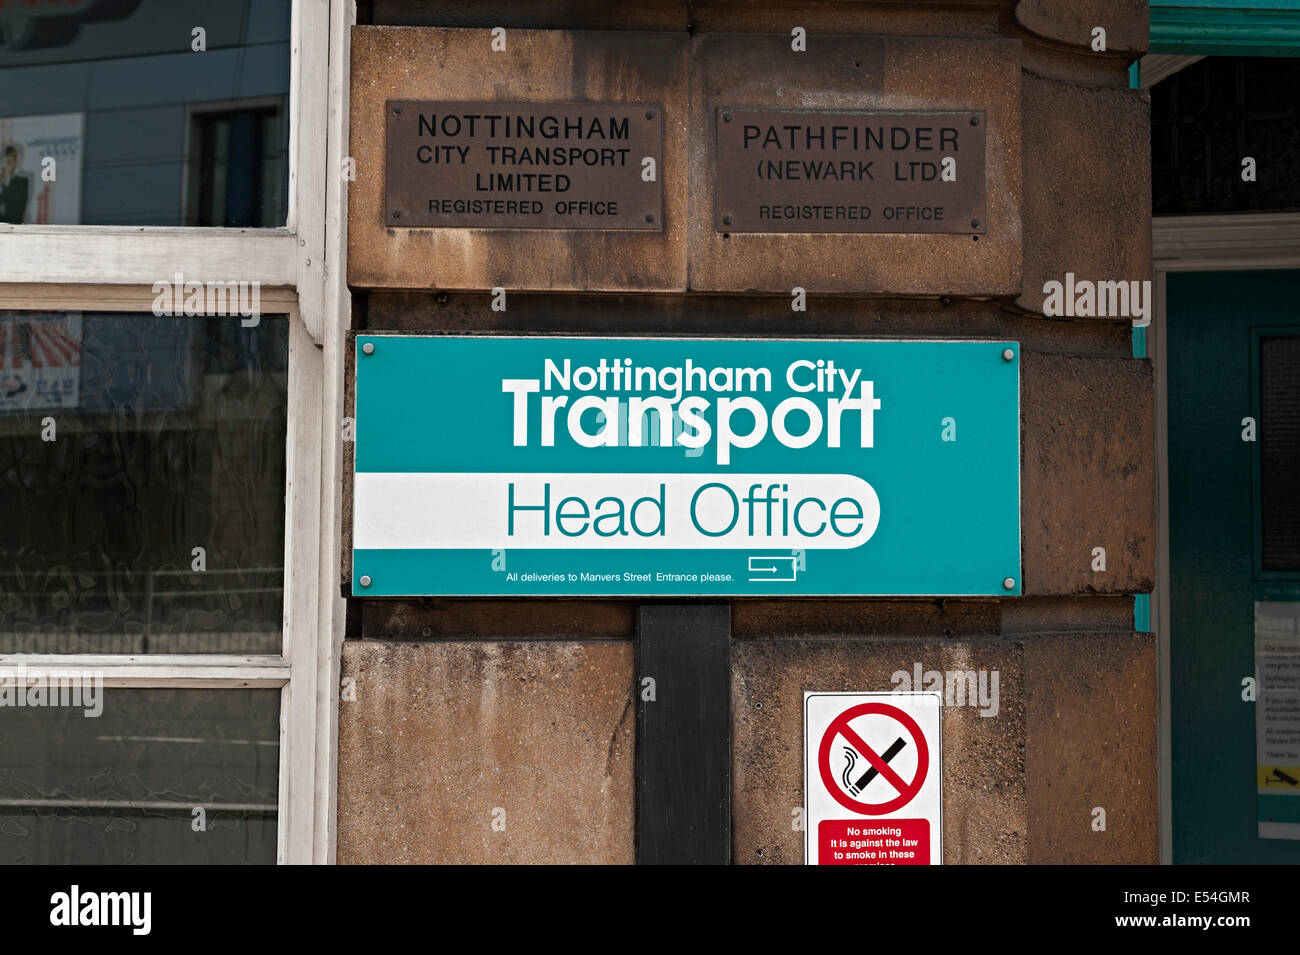 Nottingham city transport head office sign Stock Photo